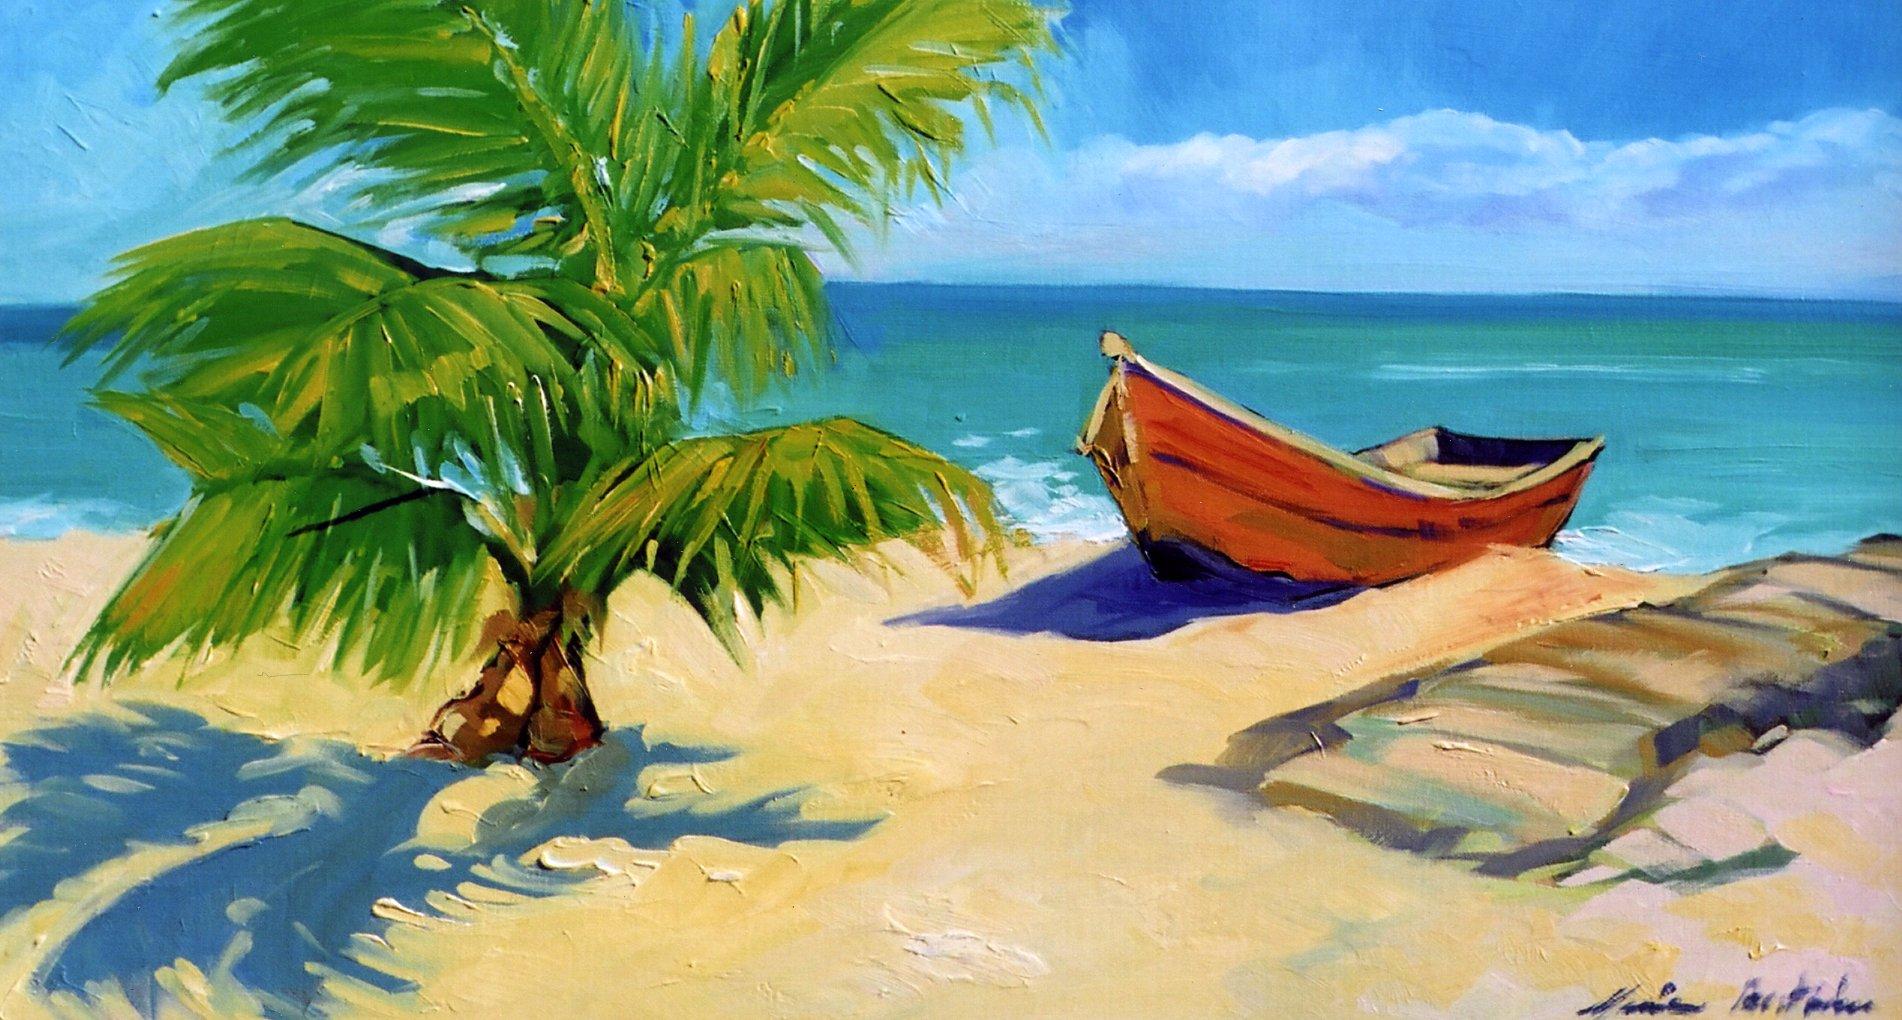 Maria Bertrán Landscape Painting - "Sunny Beach Fishing Boats" Contemporary Impressionist Oil of Florida Keys